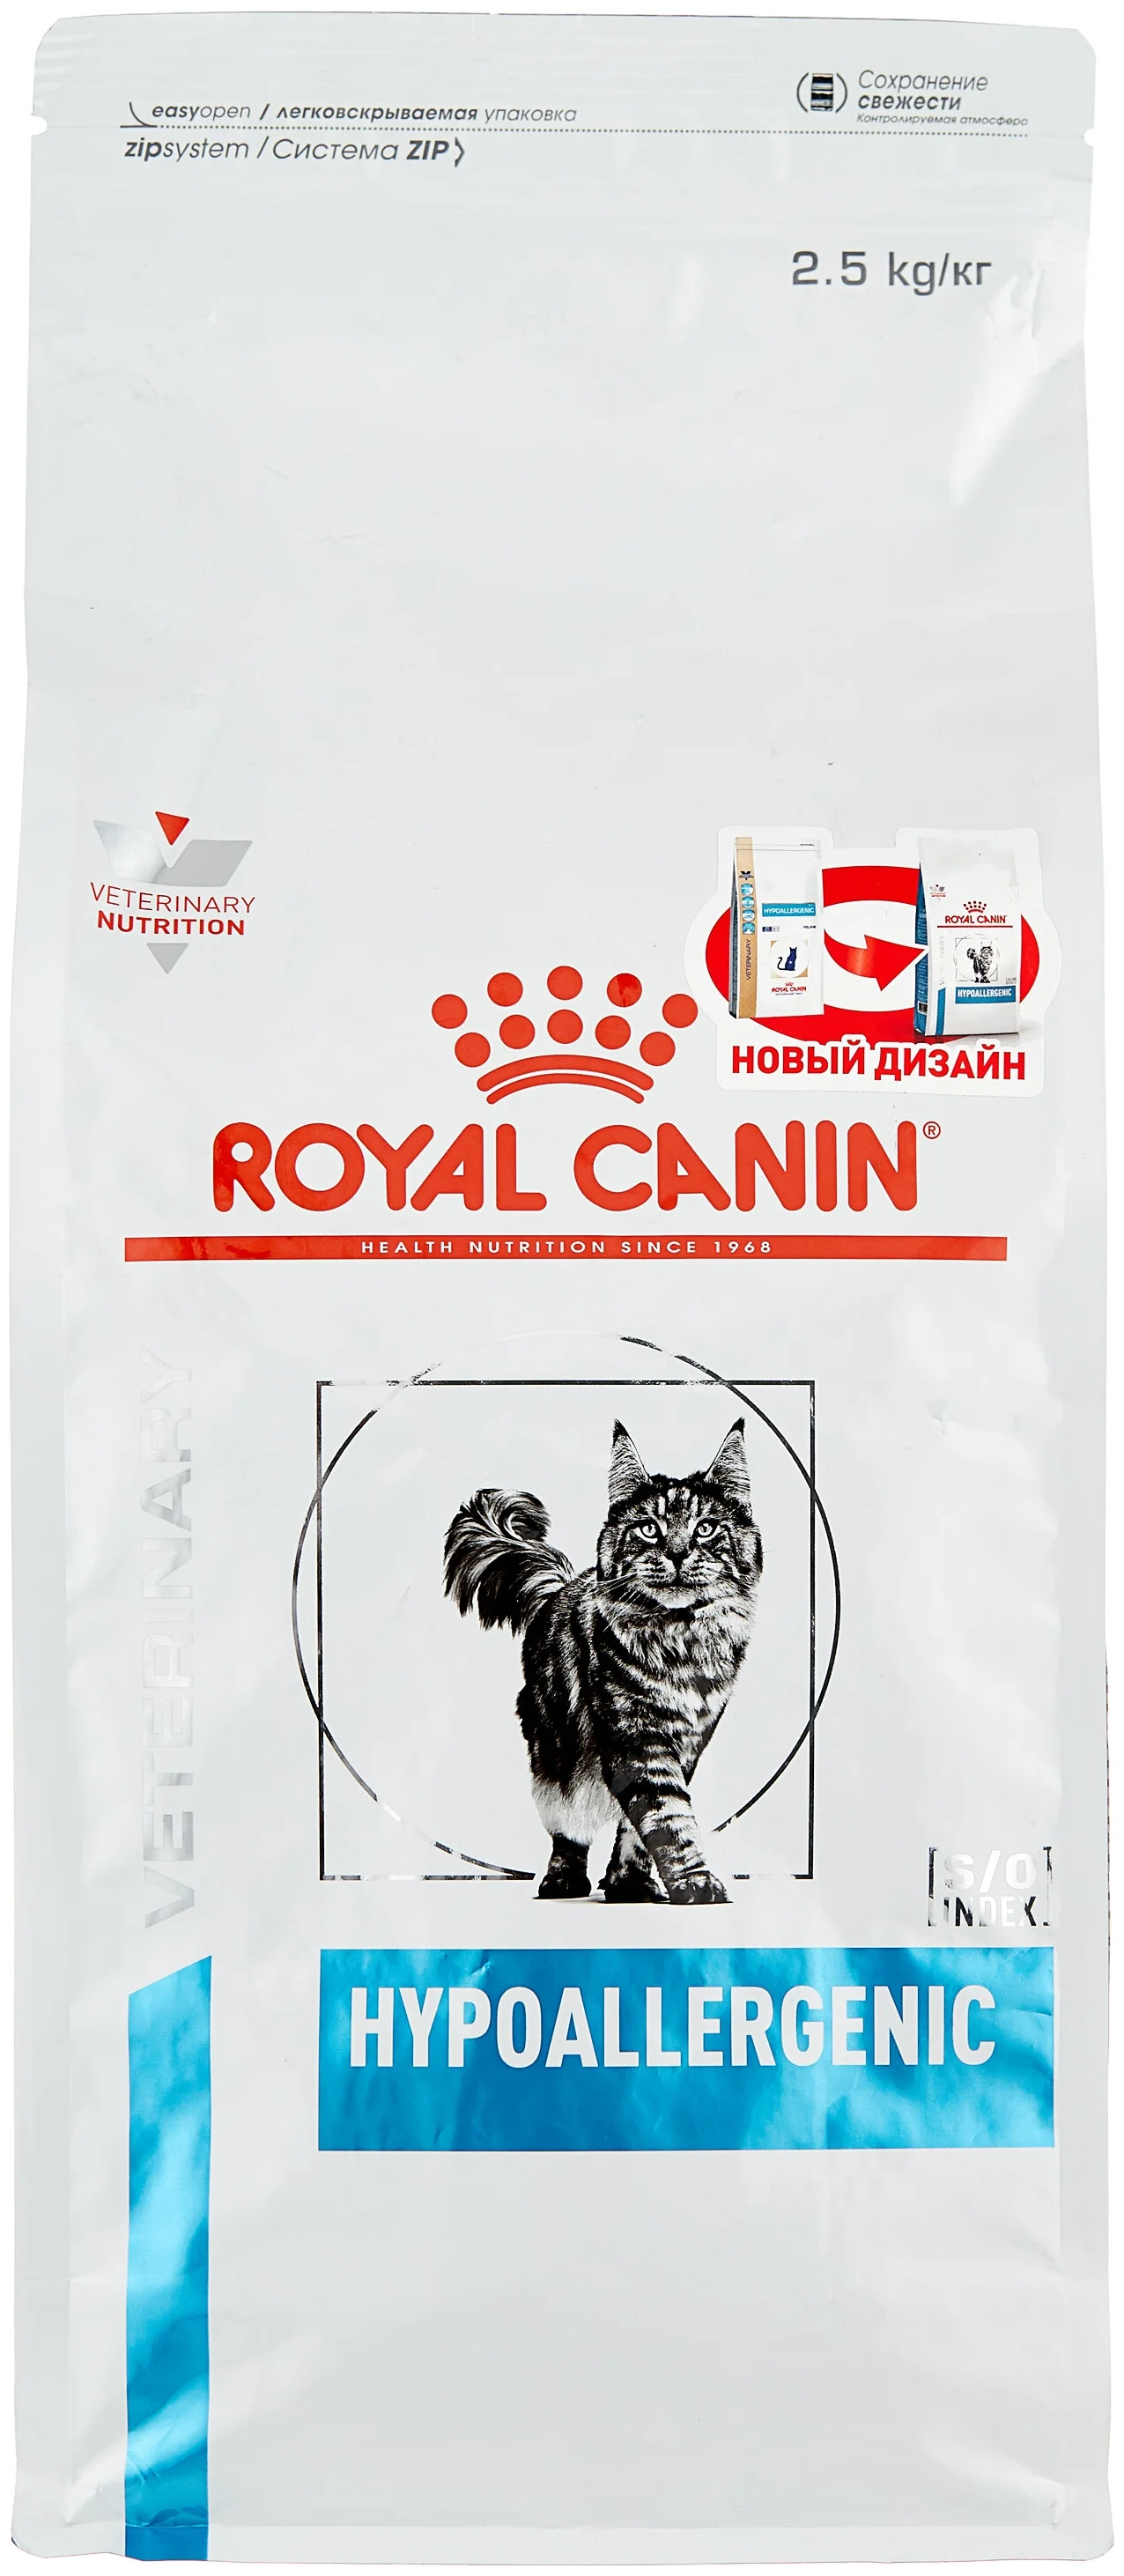 Royal Canin "Hypoallergenic" - ветеринарная диета: при аллергии, при проблемах с ЖКТ